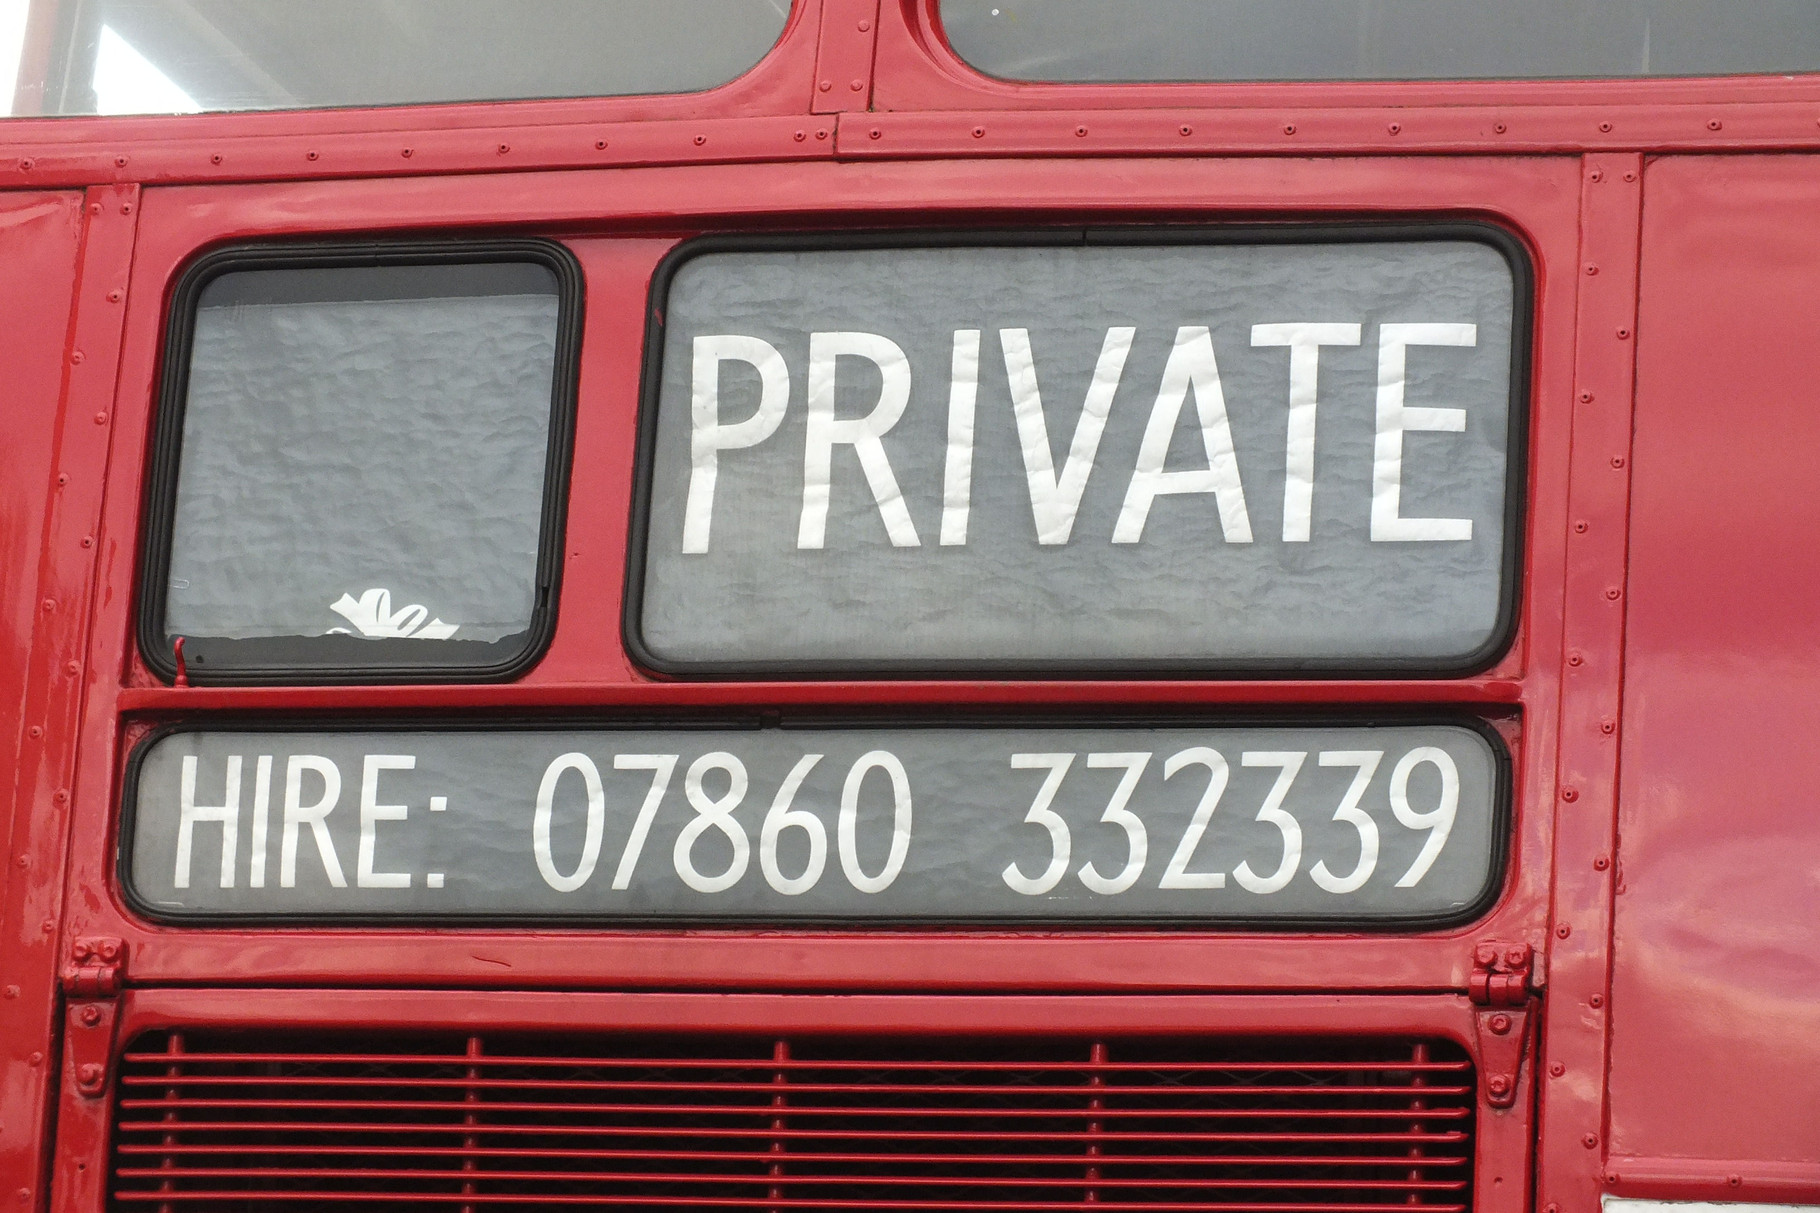 Bus (London)